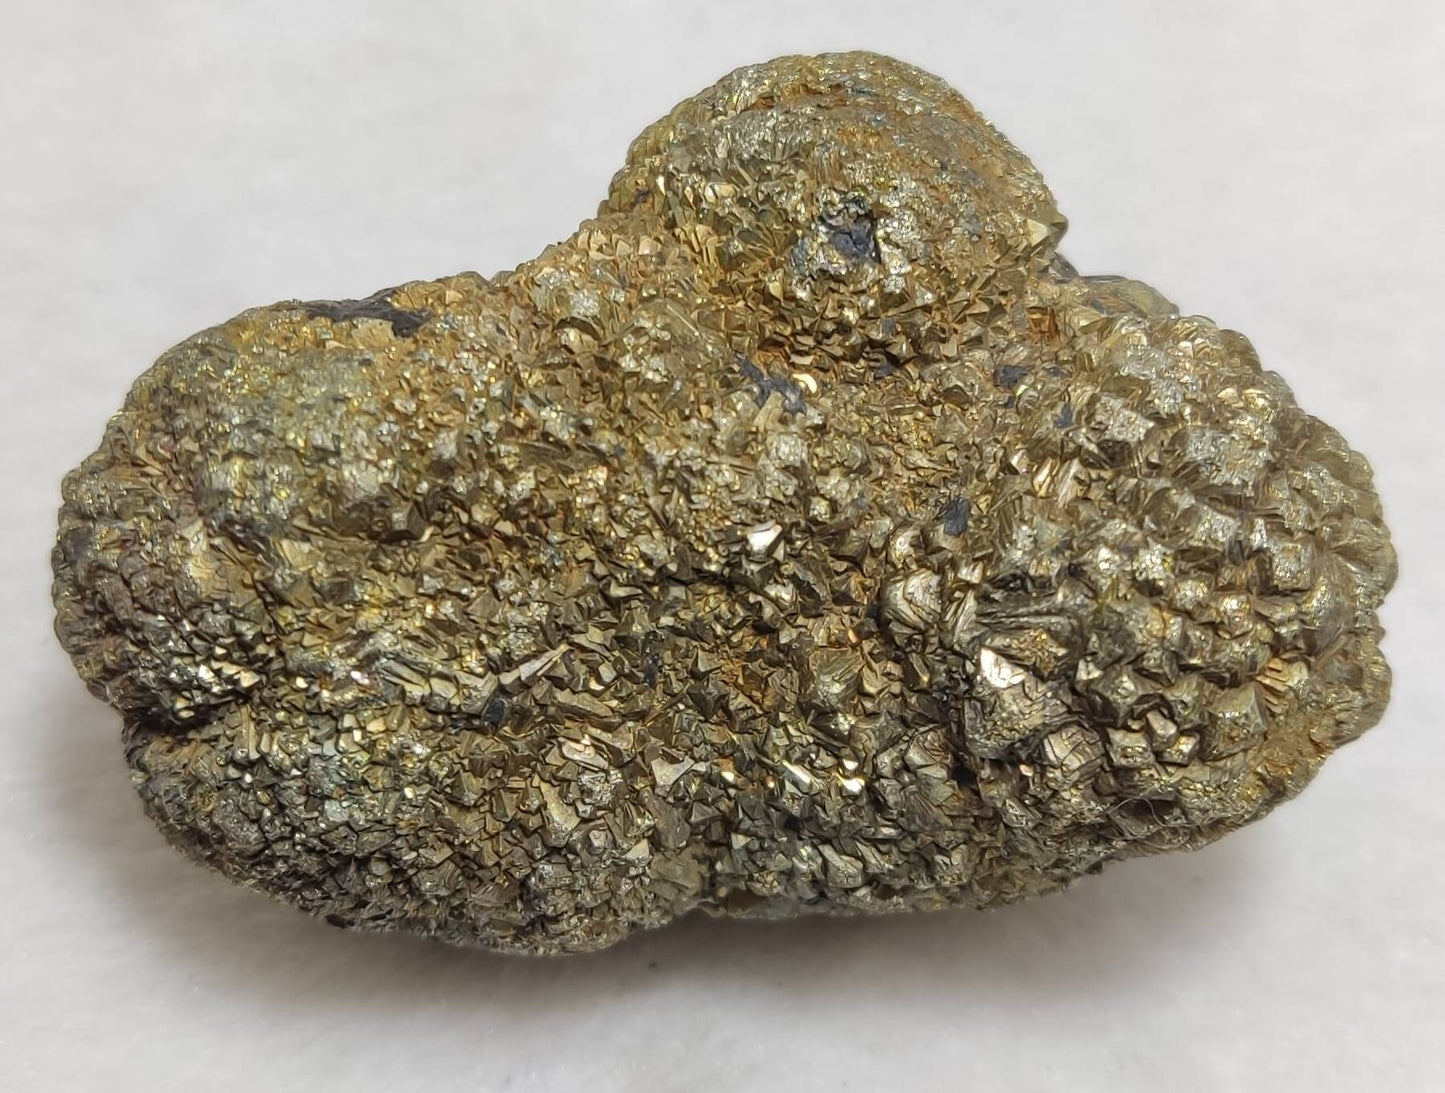 An amazing specimen of pyrite/marcasite 113 grams